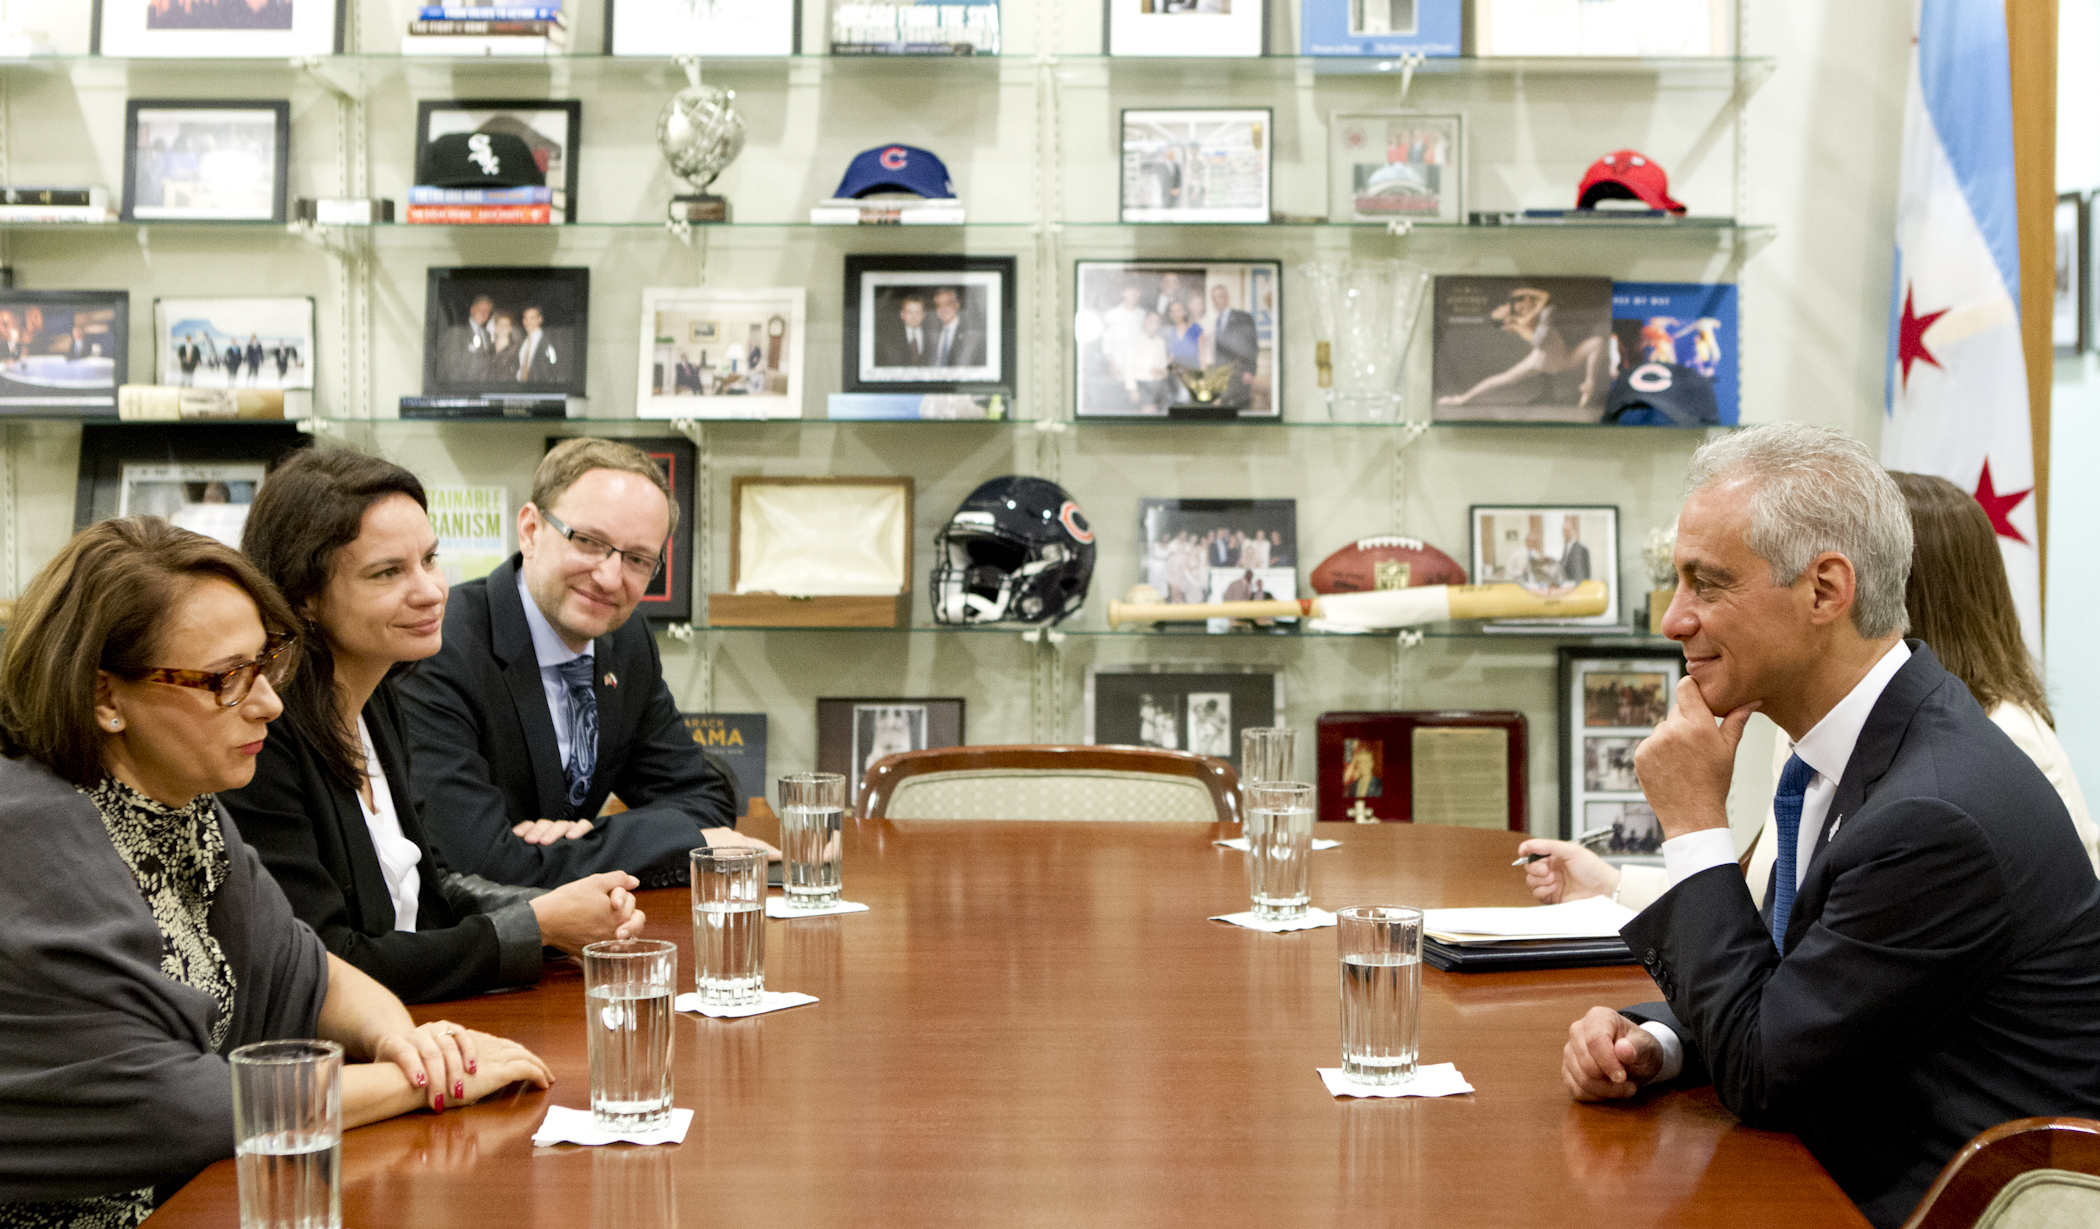 Mayor Emanuel today welcomed the Mayor of Prague, Adriana Krnáčová, and a Czech delegation to Chicago.